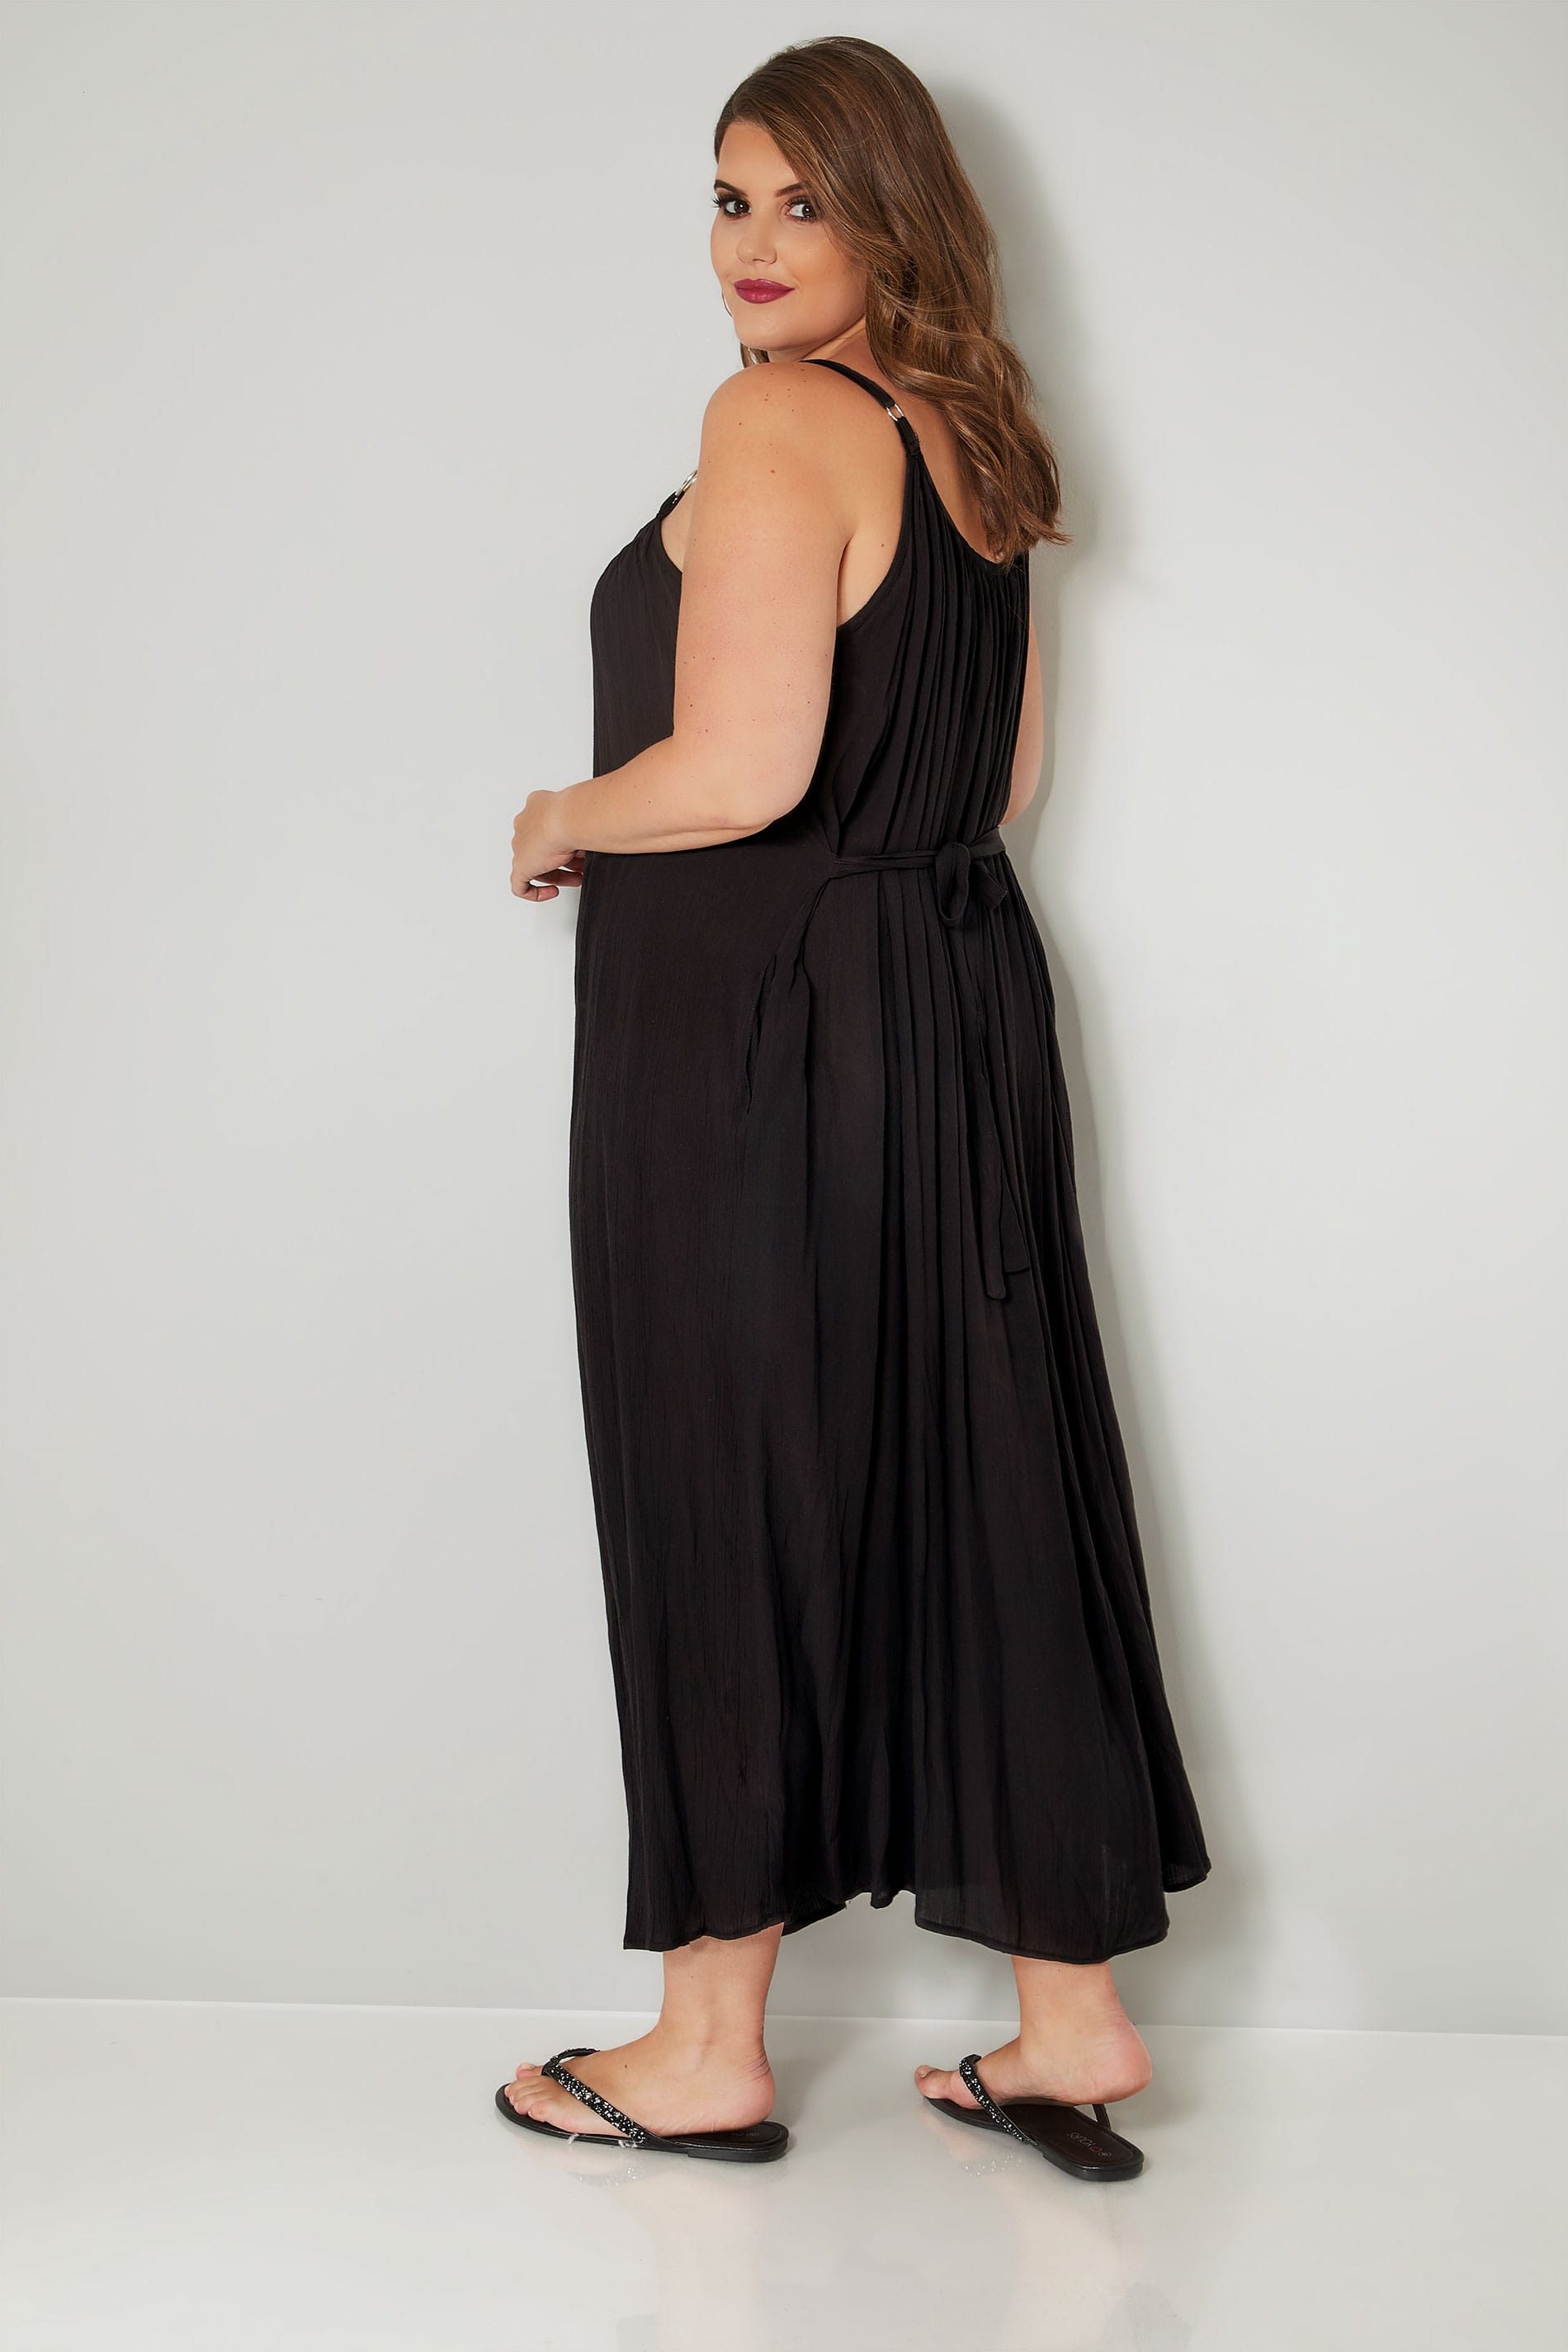 Black Maxi Dress With Ring Detail Straps & Tie Waist, Plus size 16 to 36